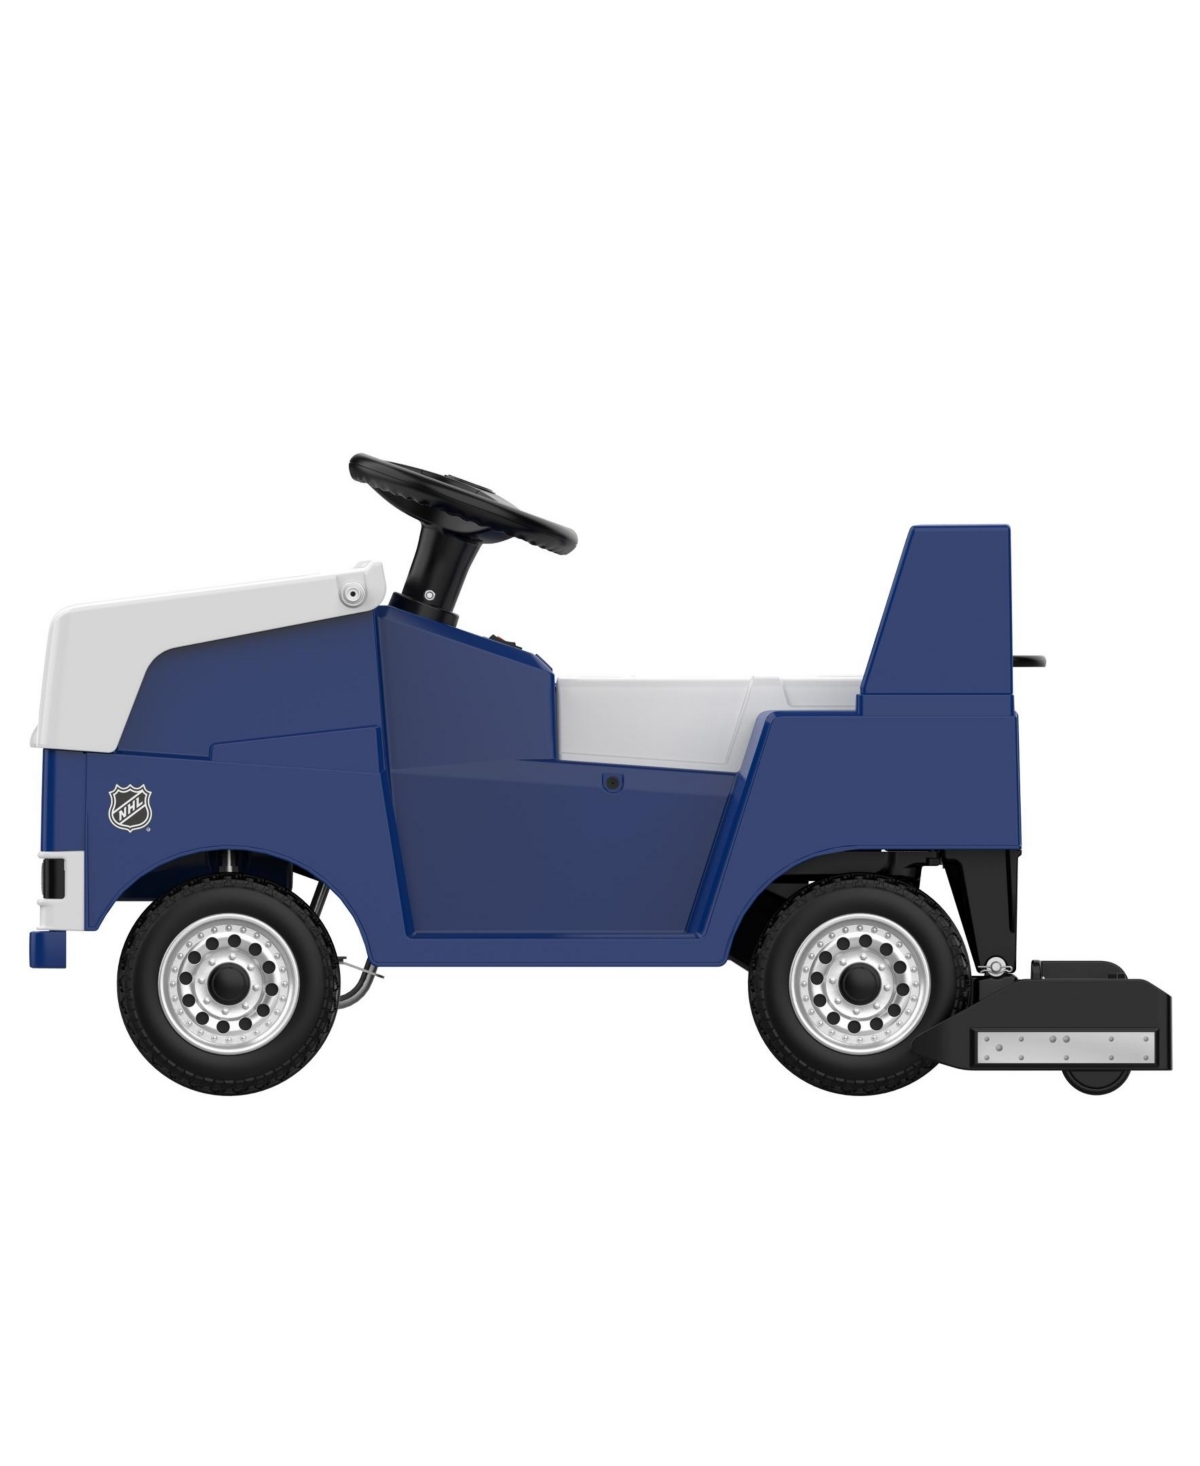 Kool Karz Playground Kids' Nhl Zamboni Electric Ride On Toy Car In Blue